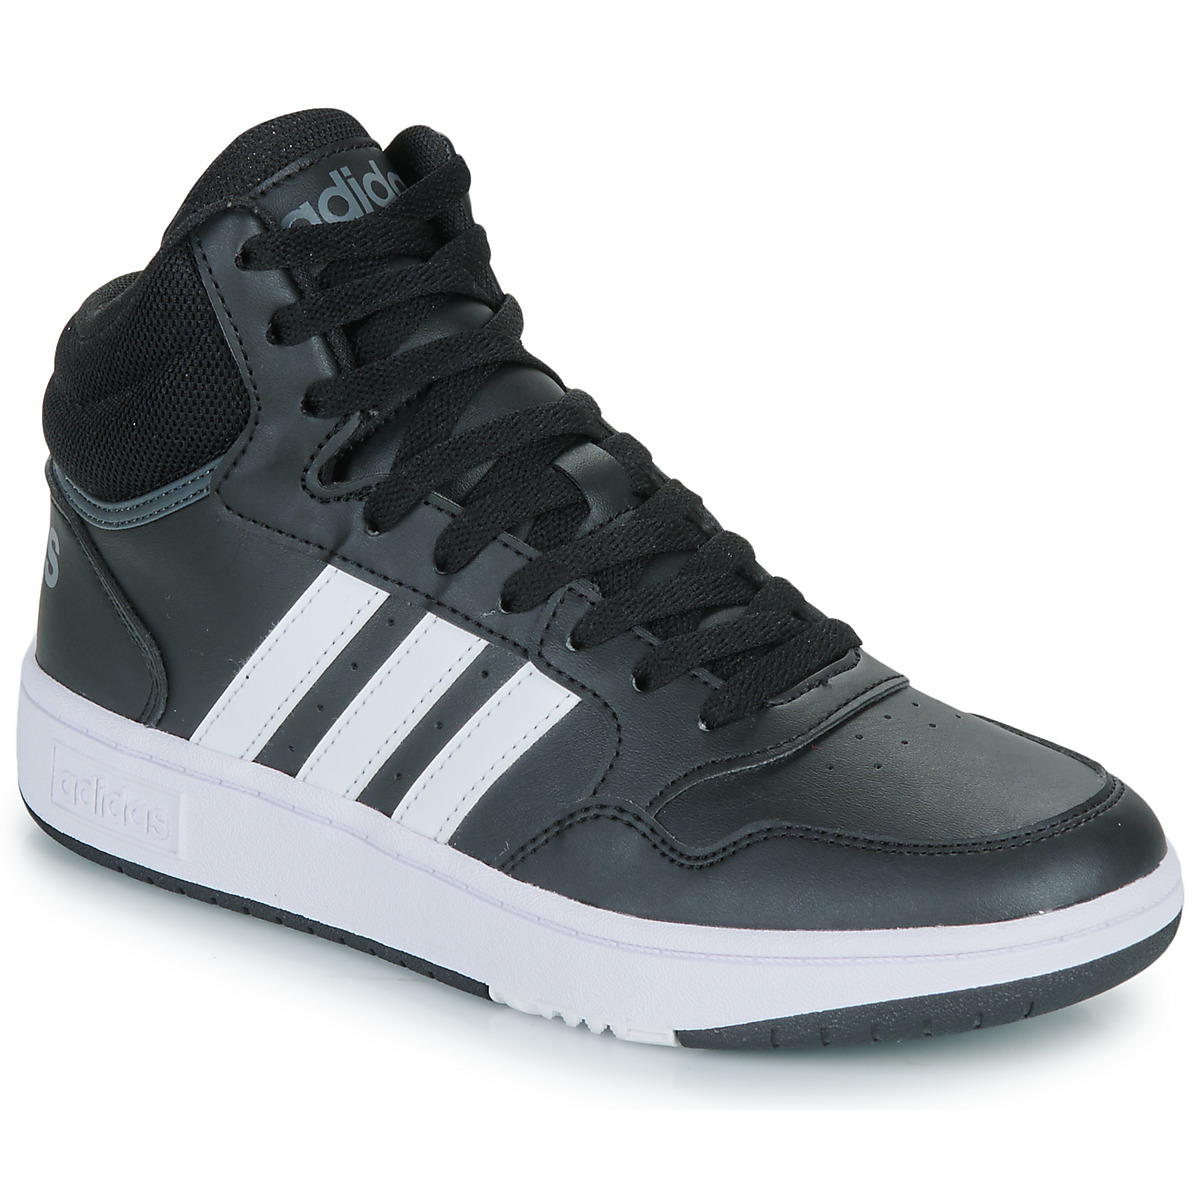 Schuhe Kinder Sneaker High Adidas Sportswear HOOPS MID 3.0 K Weiß